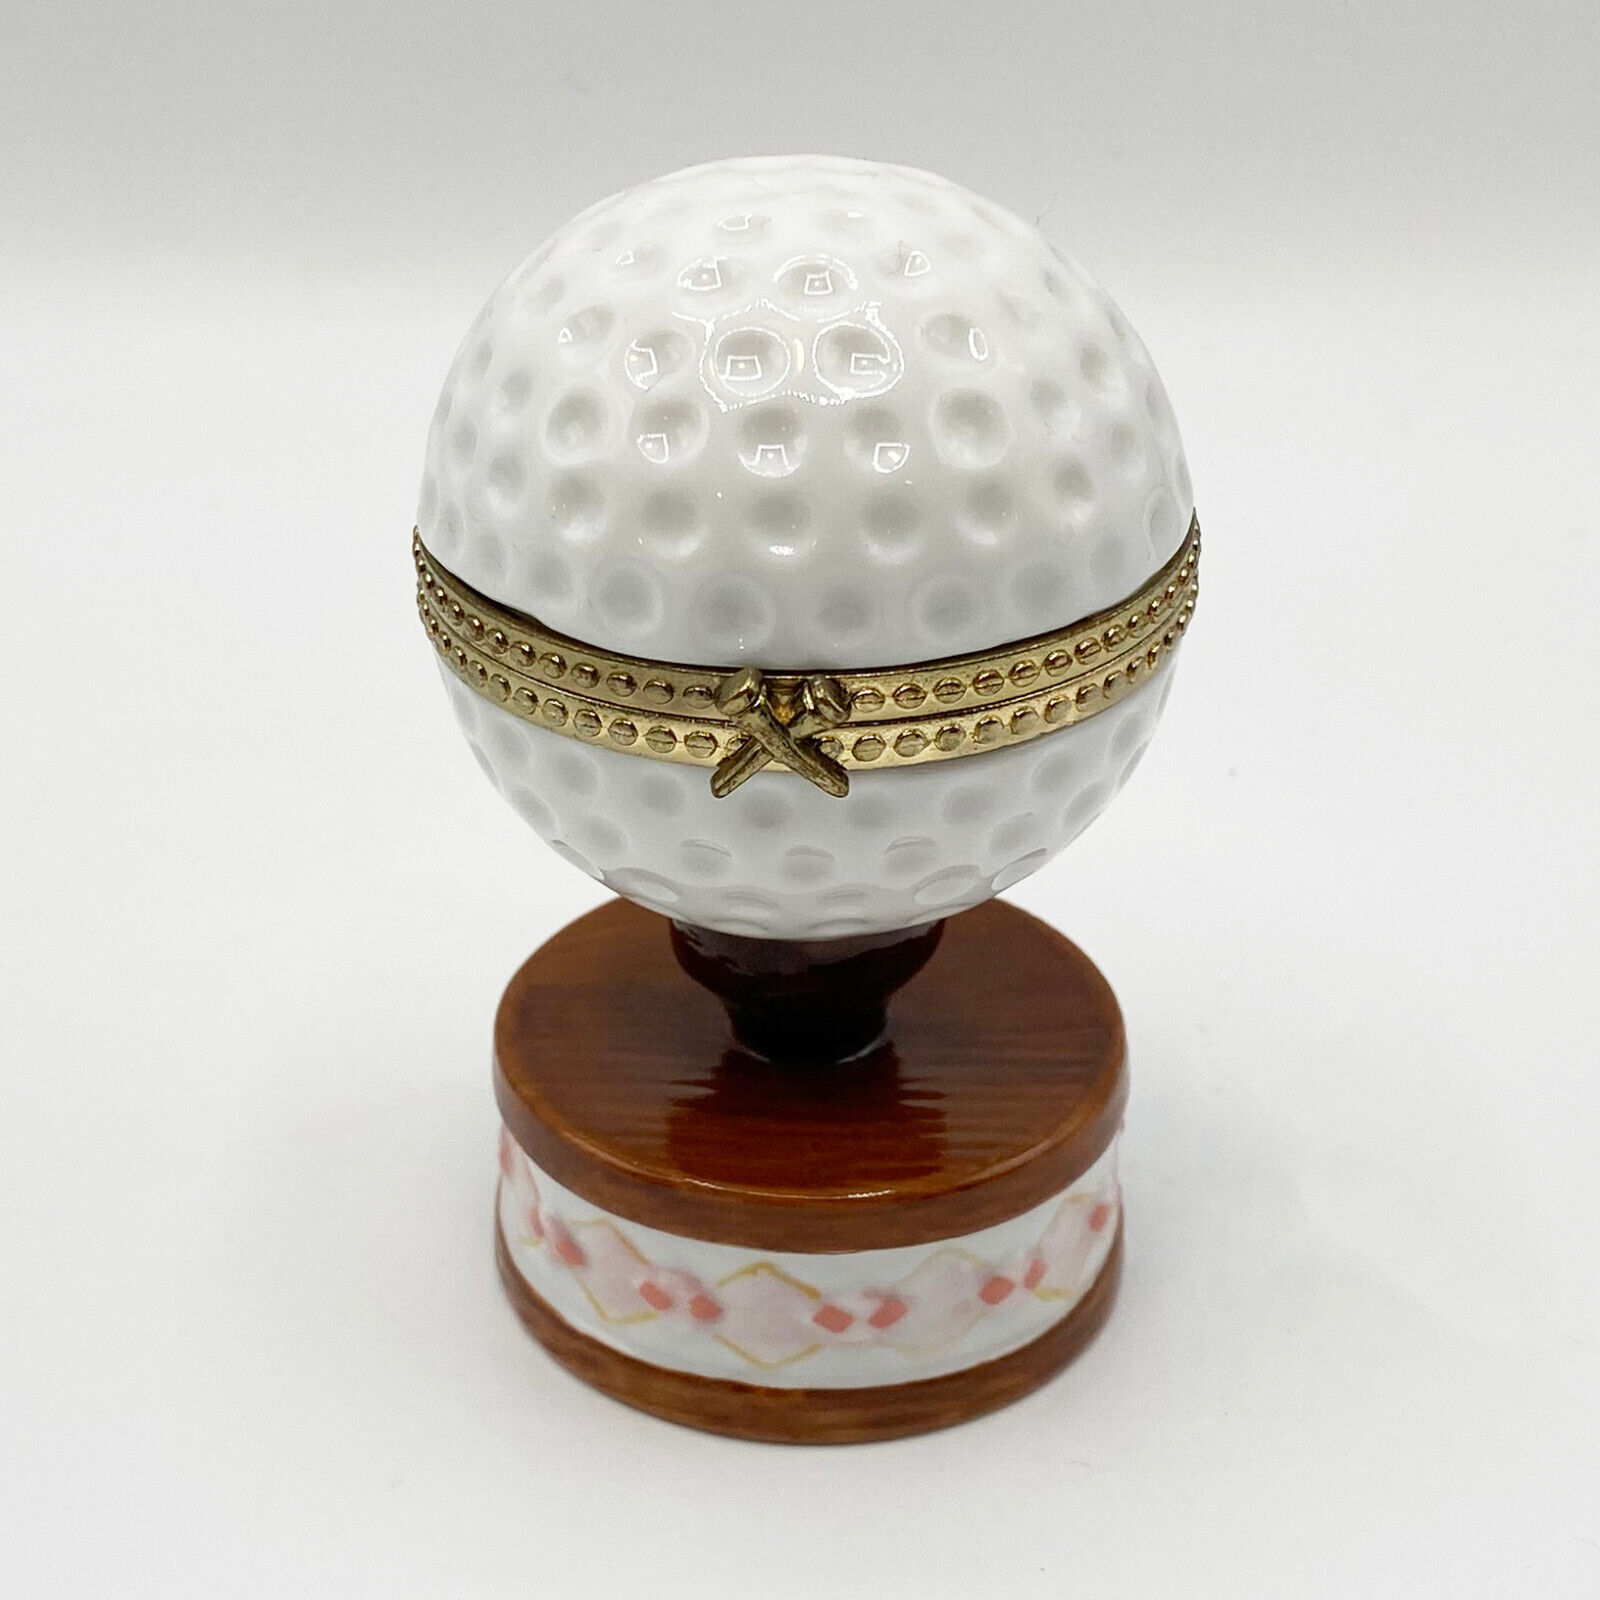 Vintage Golf Ball on Stand Trinket Box - White Brown Pink